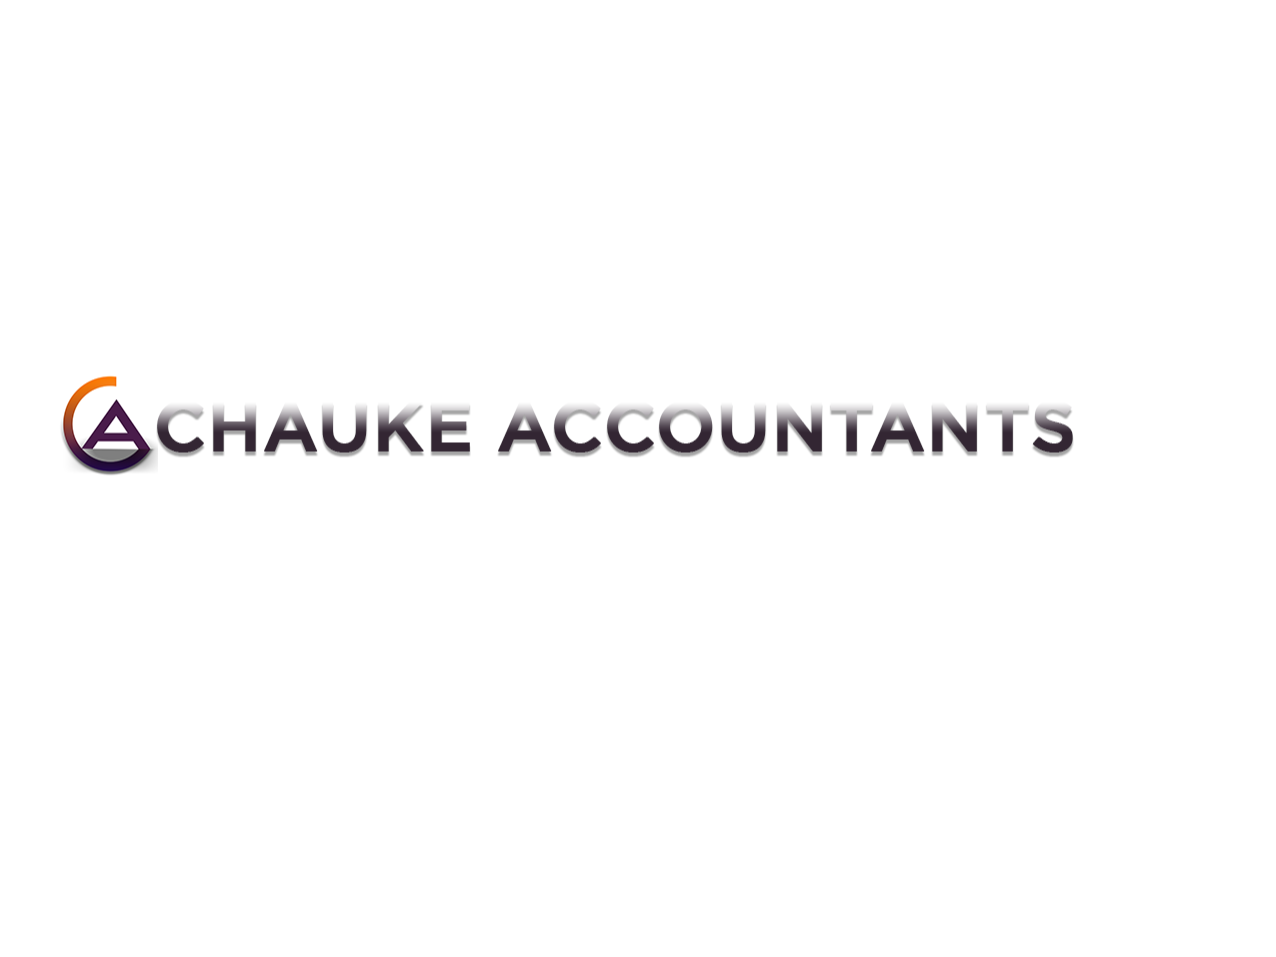 Chauke and Co Business Accountants logo